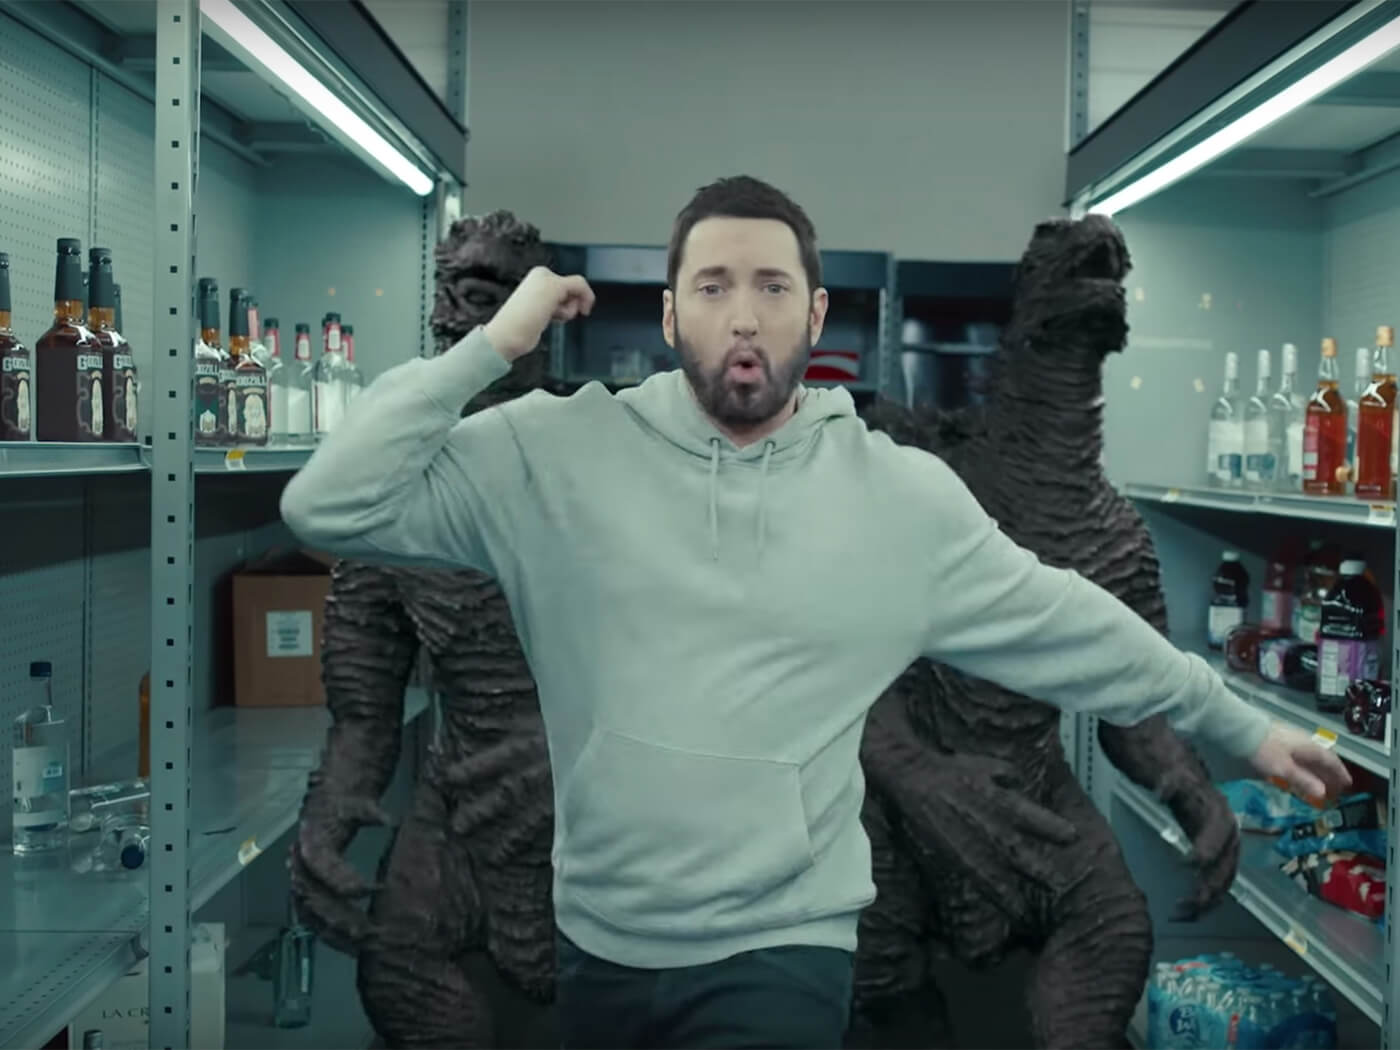 Eminem pays tribute to Juice WRLD in “Godzilla” video